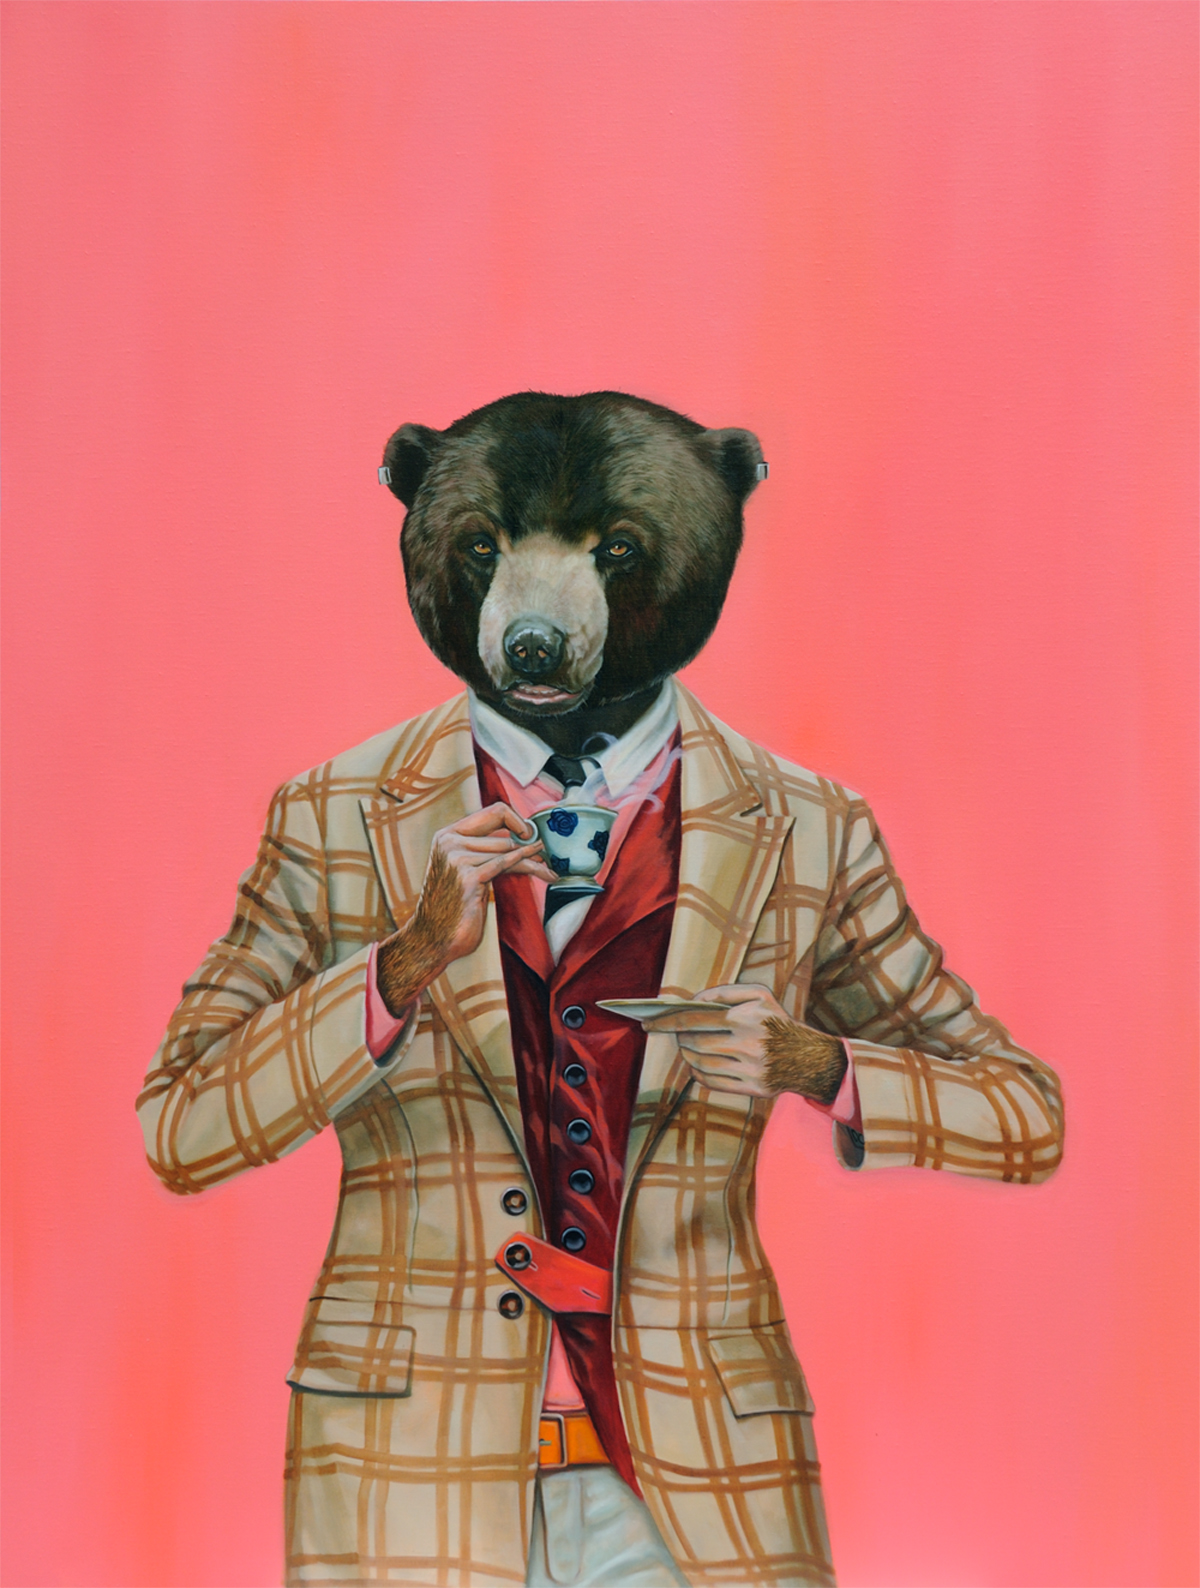 images/All_artworks/hybrid_society/new-age-metrosexual-bear.jpg